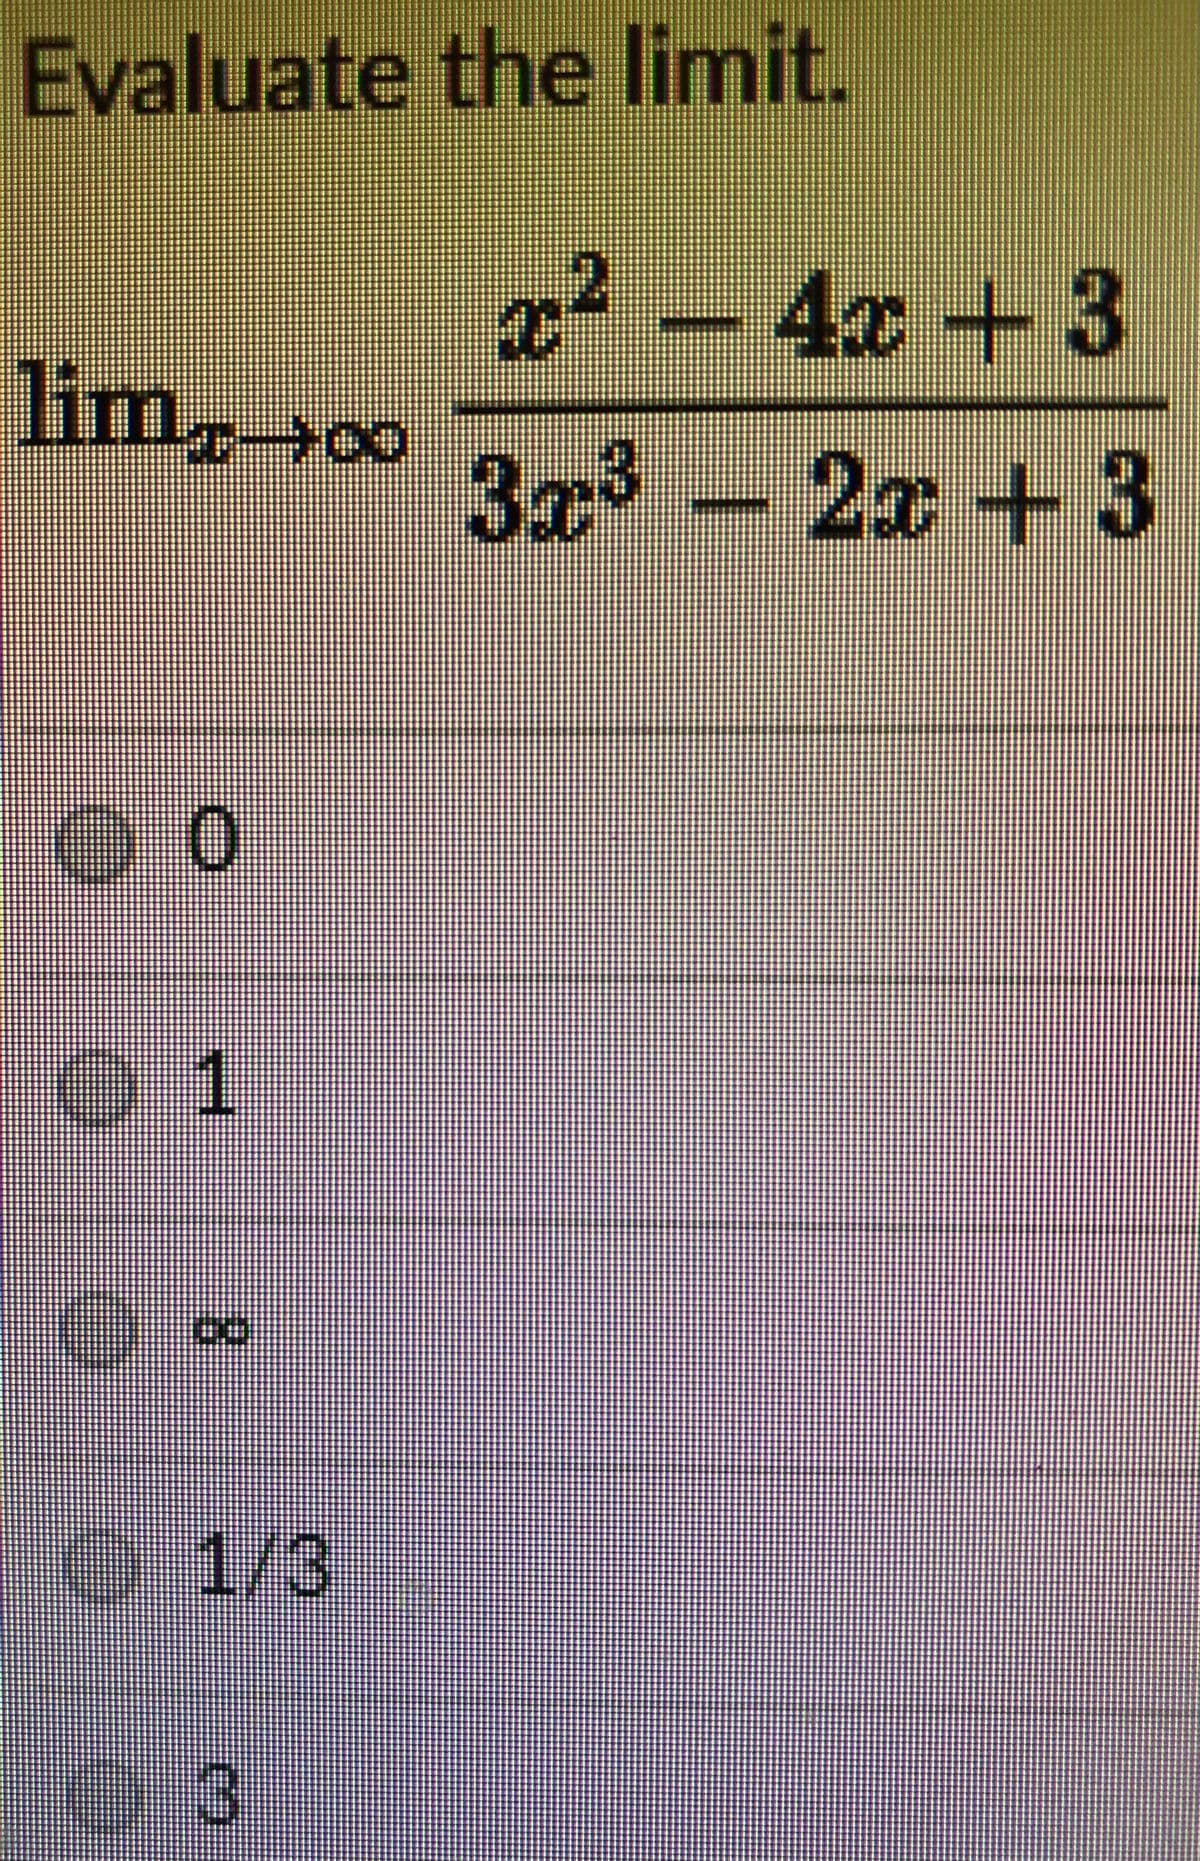 Evaluate the limit.
2²
4x+3
lim,>∞
3x³ -
2x+3
01
O 1/3
0:3
